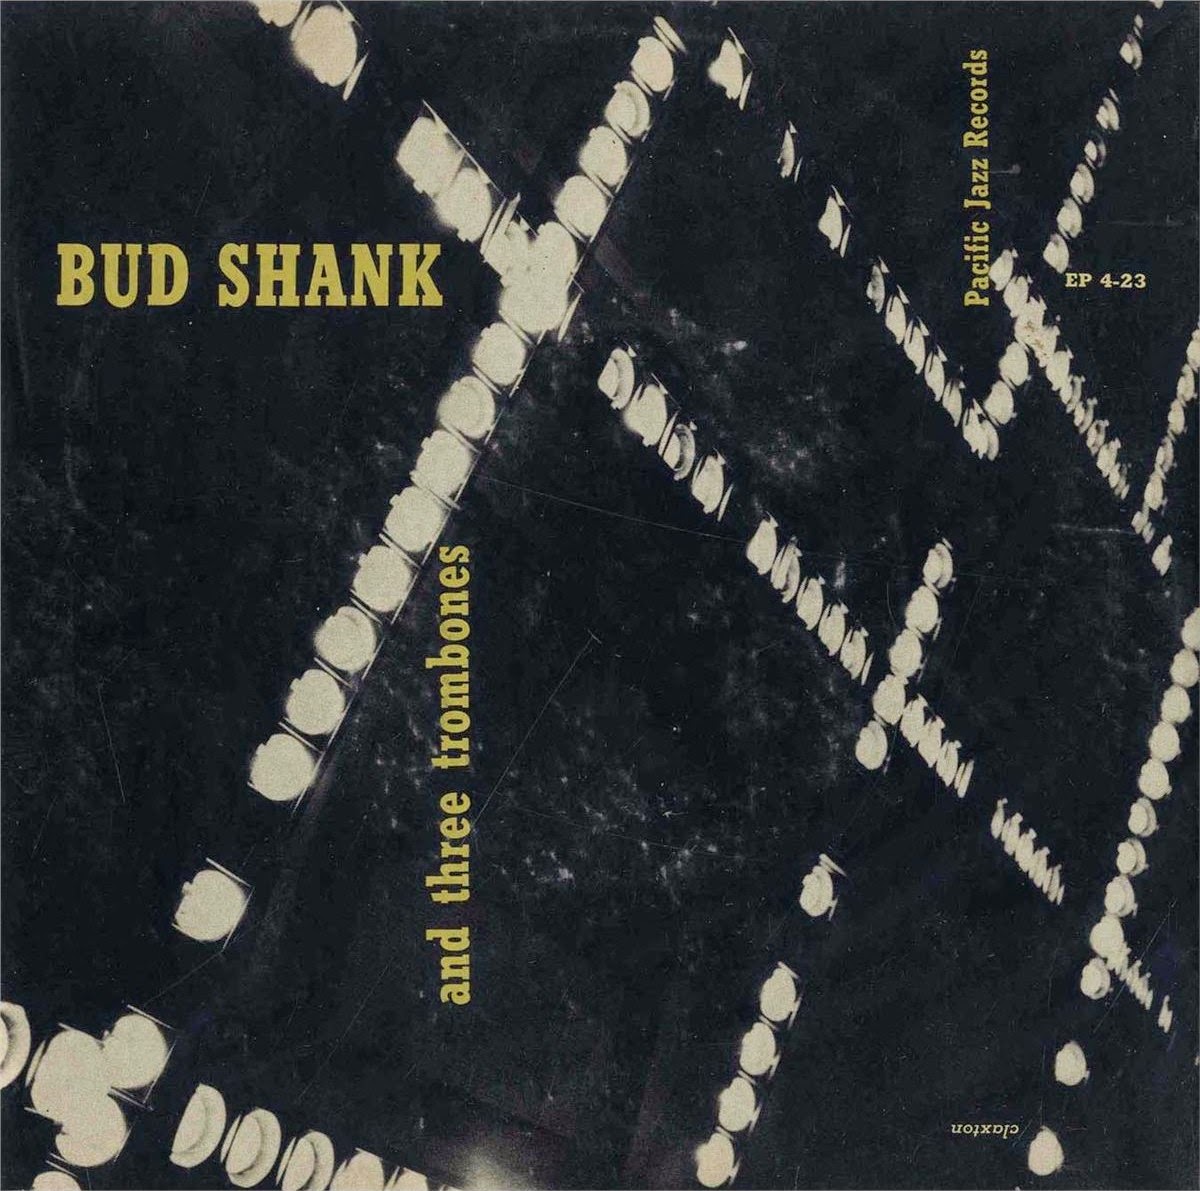 BUD SHANK - Bud Shank and Three Trombones cover 